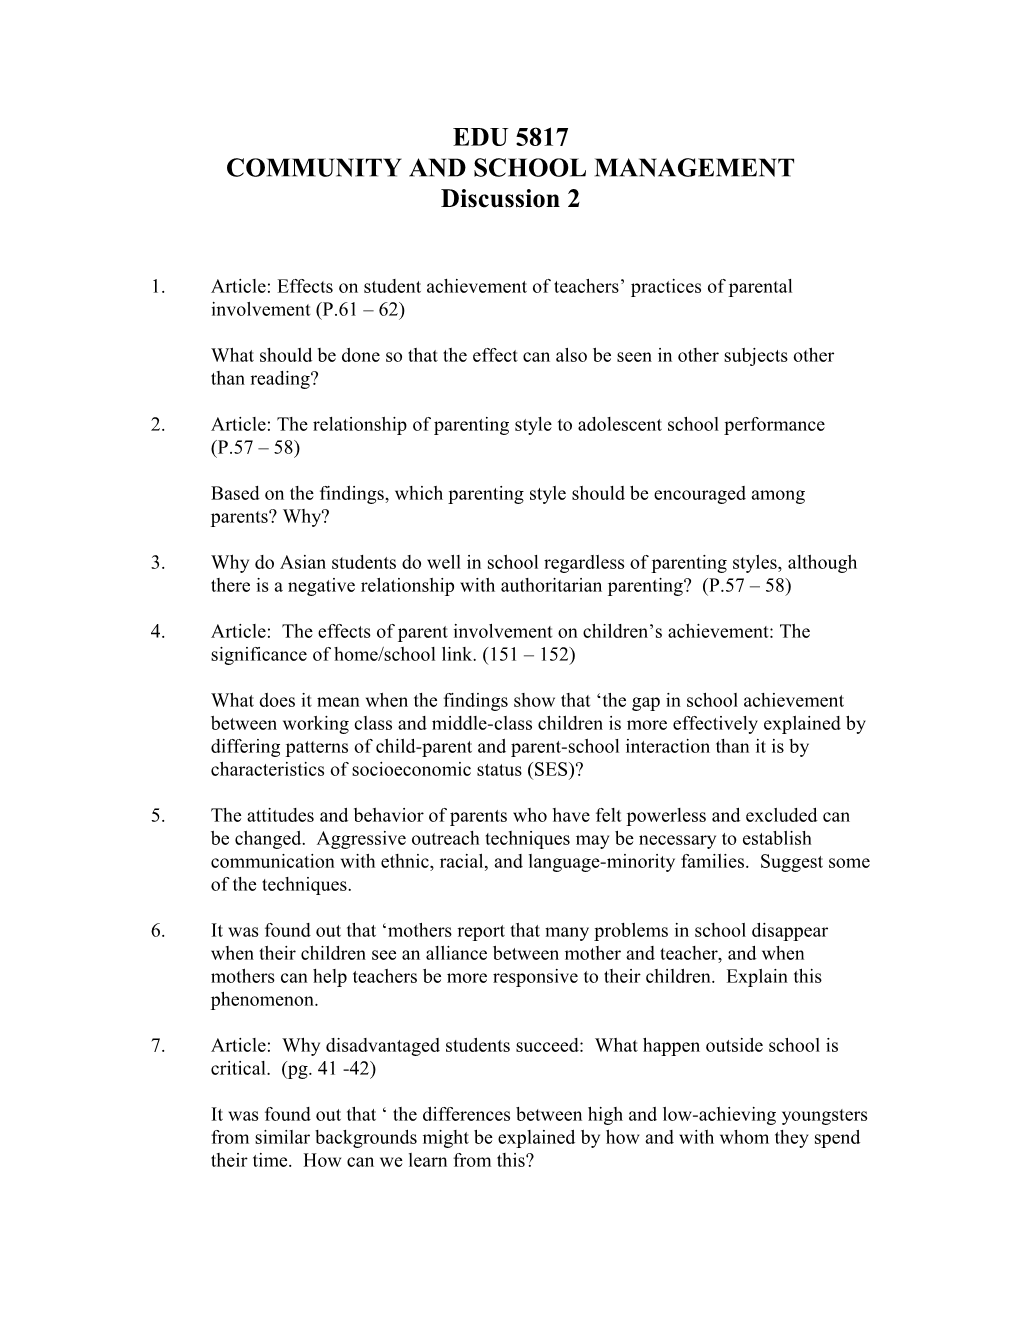 Community and School Management